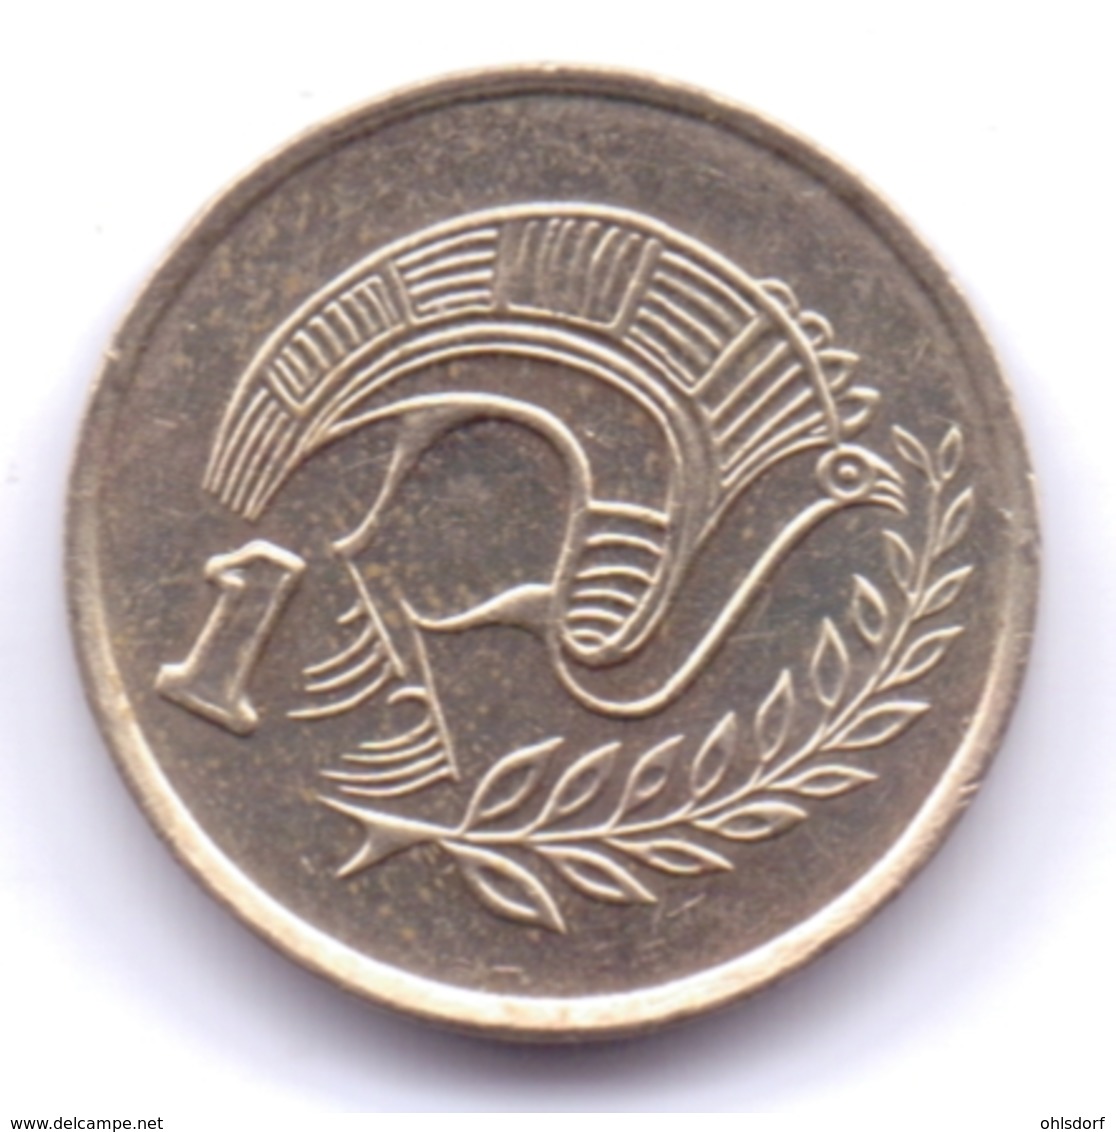 CYPRUS 1987: 1 Cent, KM 53 - Cyprus